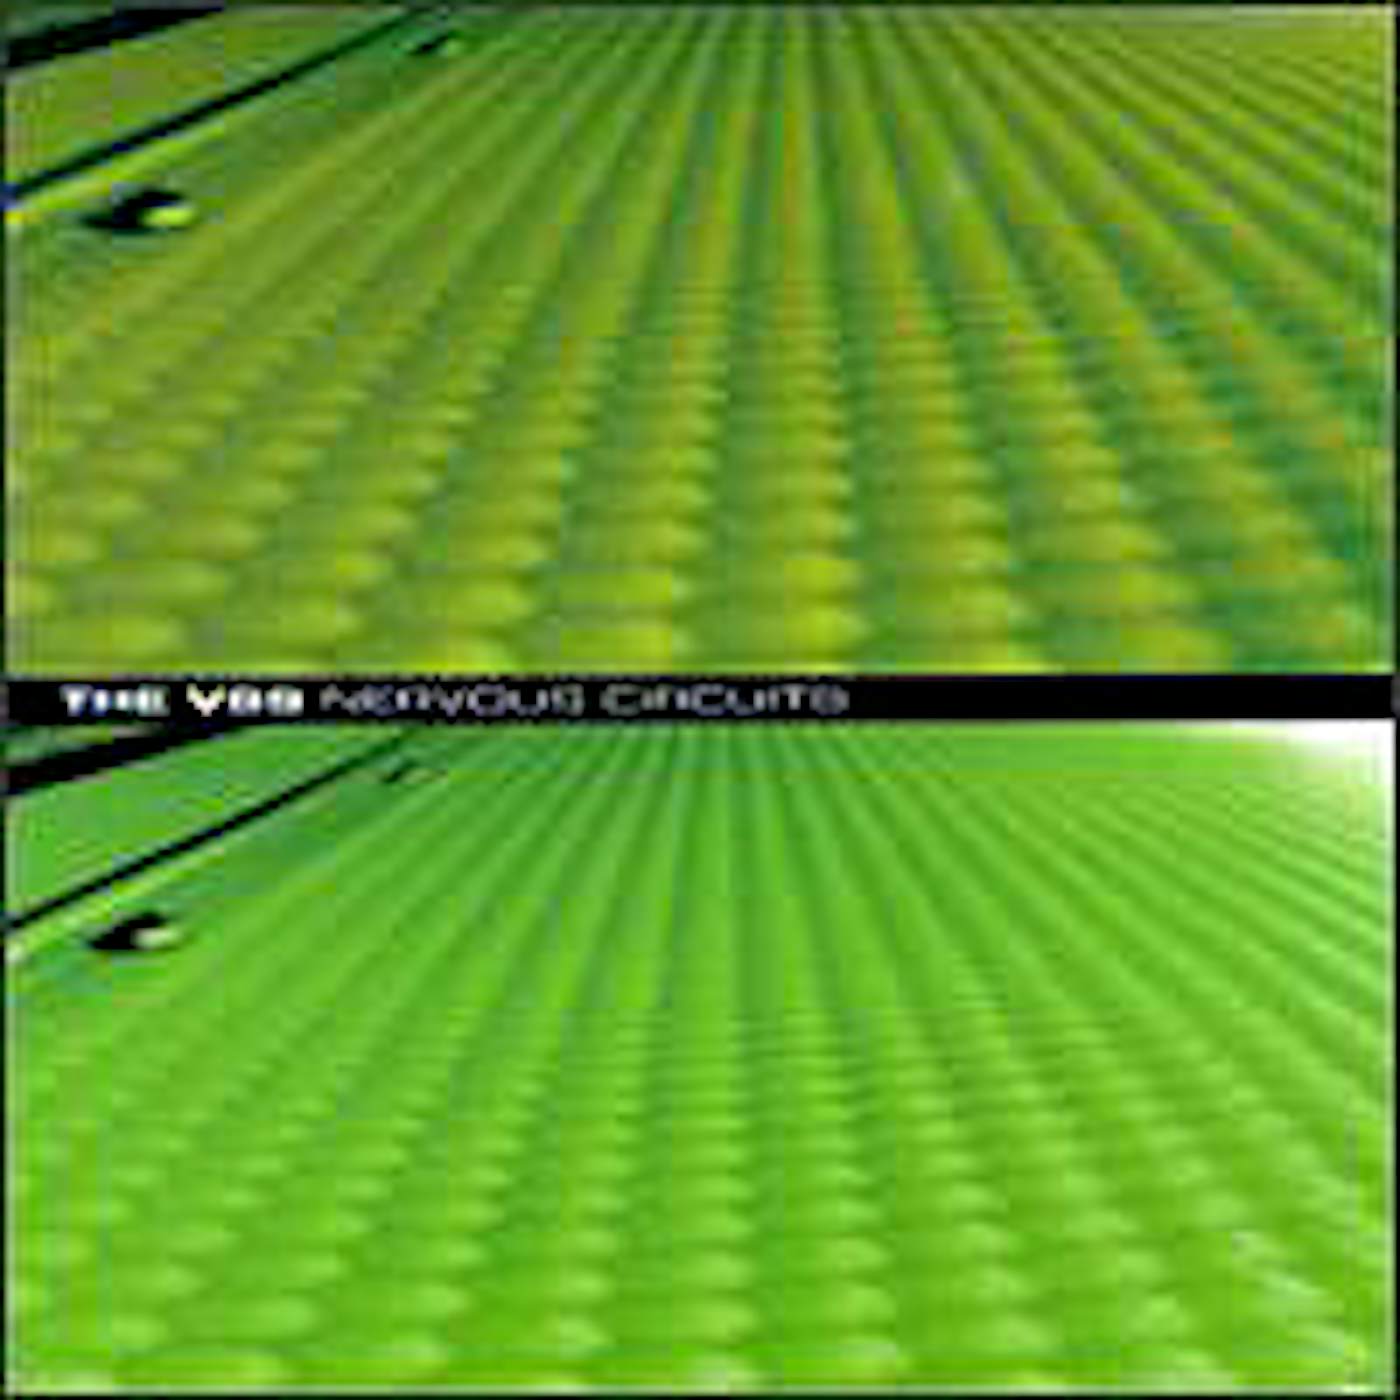 The VSS NERVOUS CIRCUITS CD